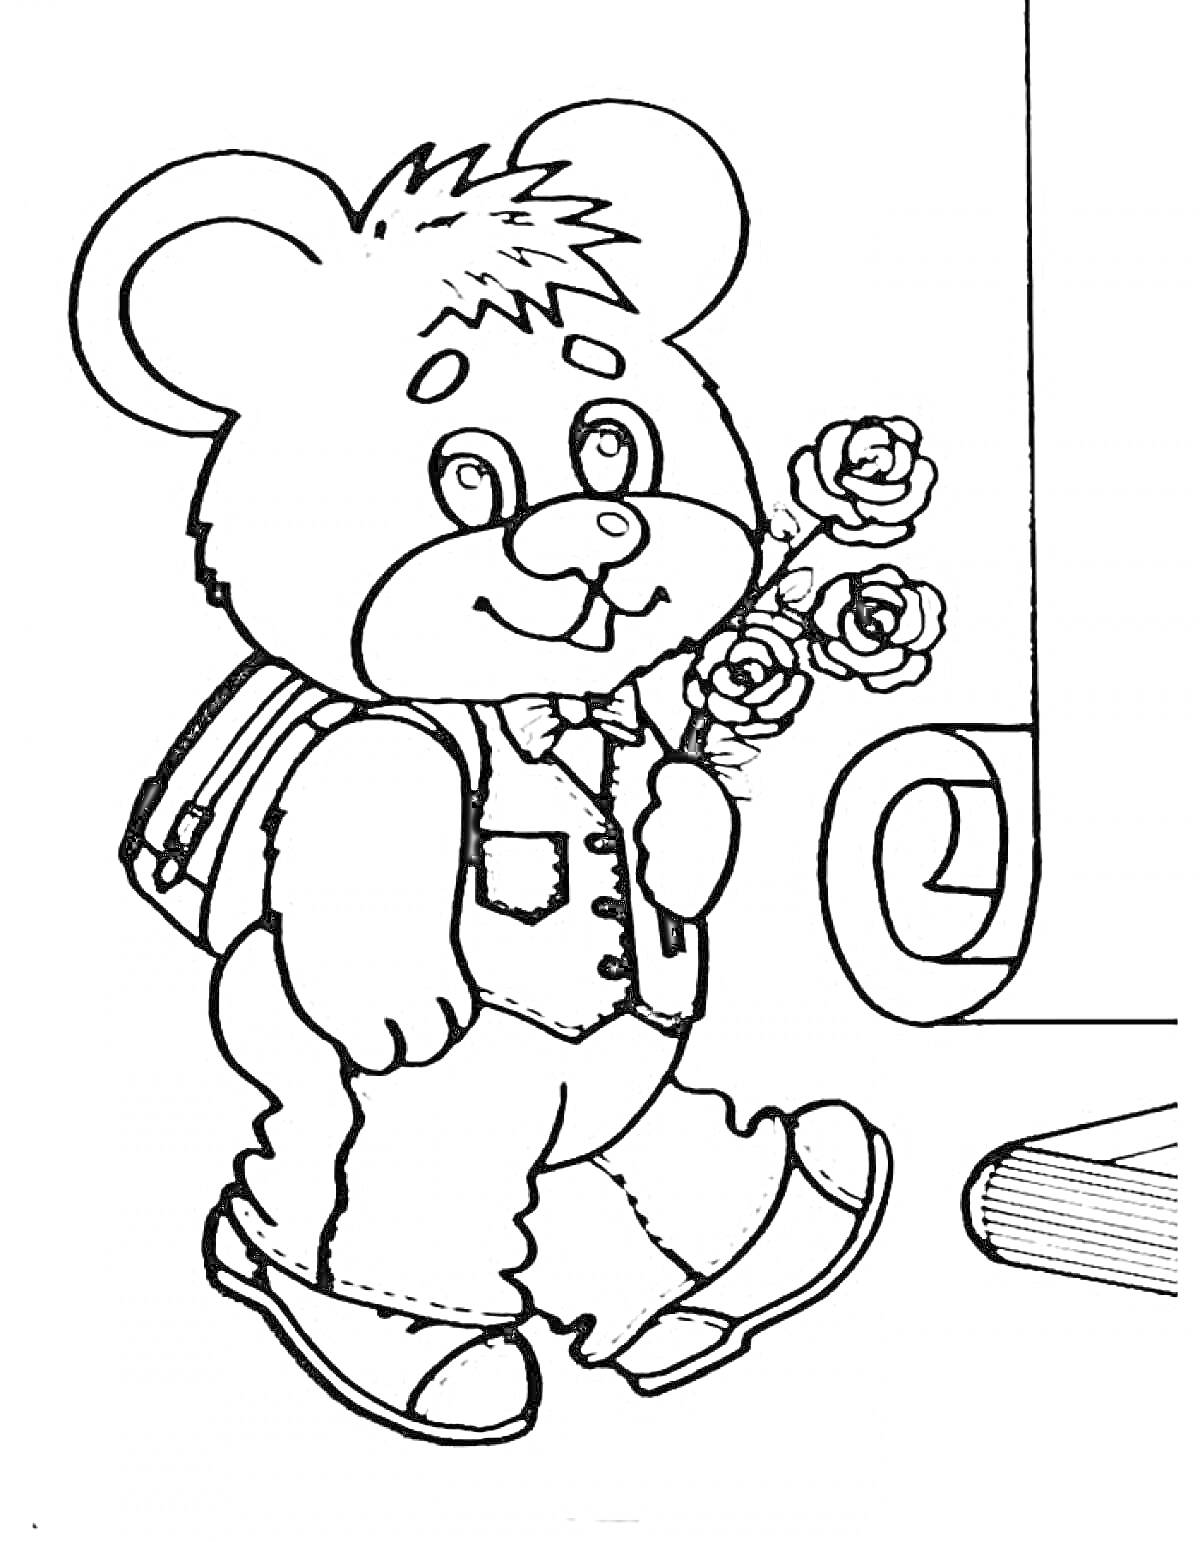 Медвежонок с букетом роз в День знаний